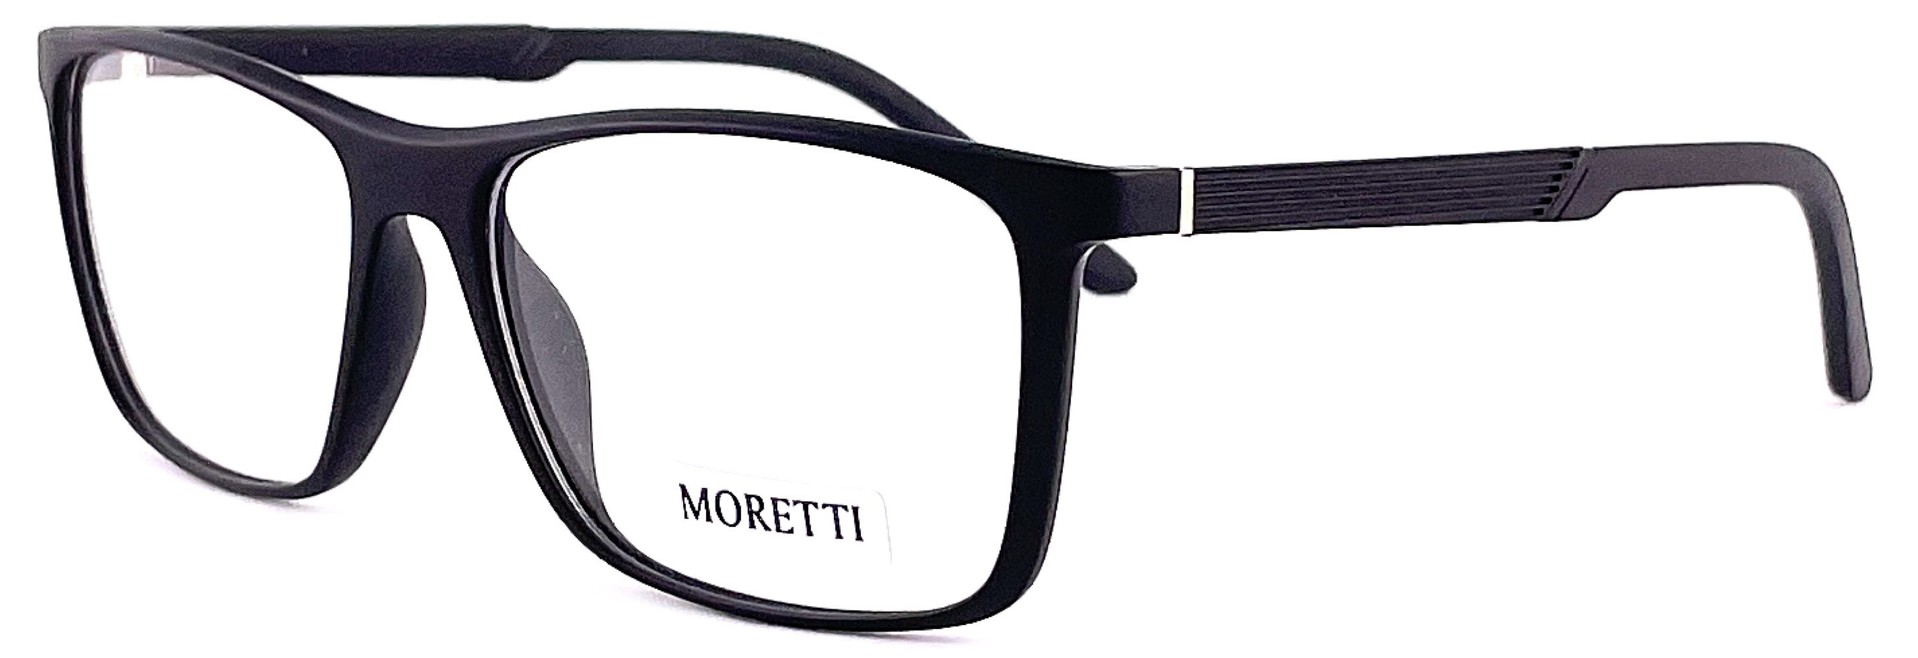 Moretti MZ01-05 C.01 2